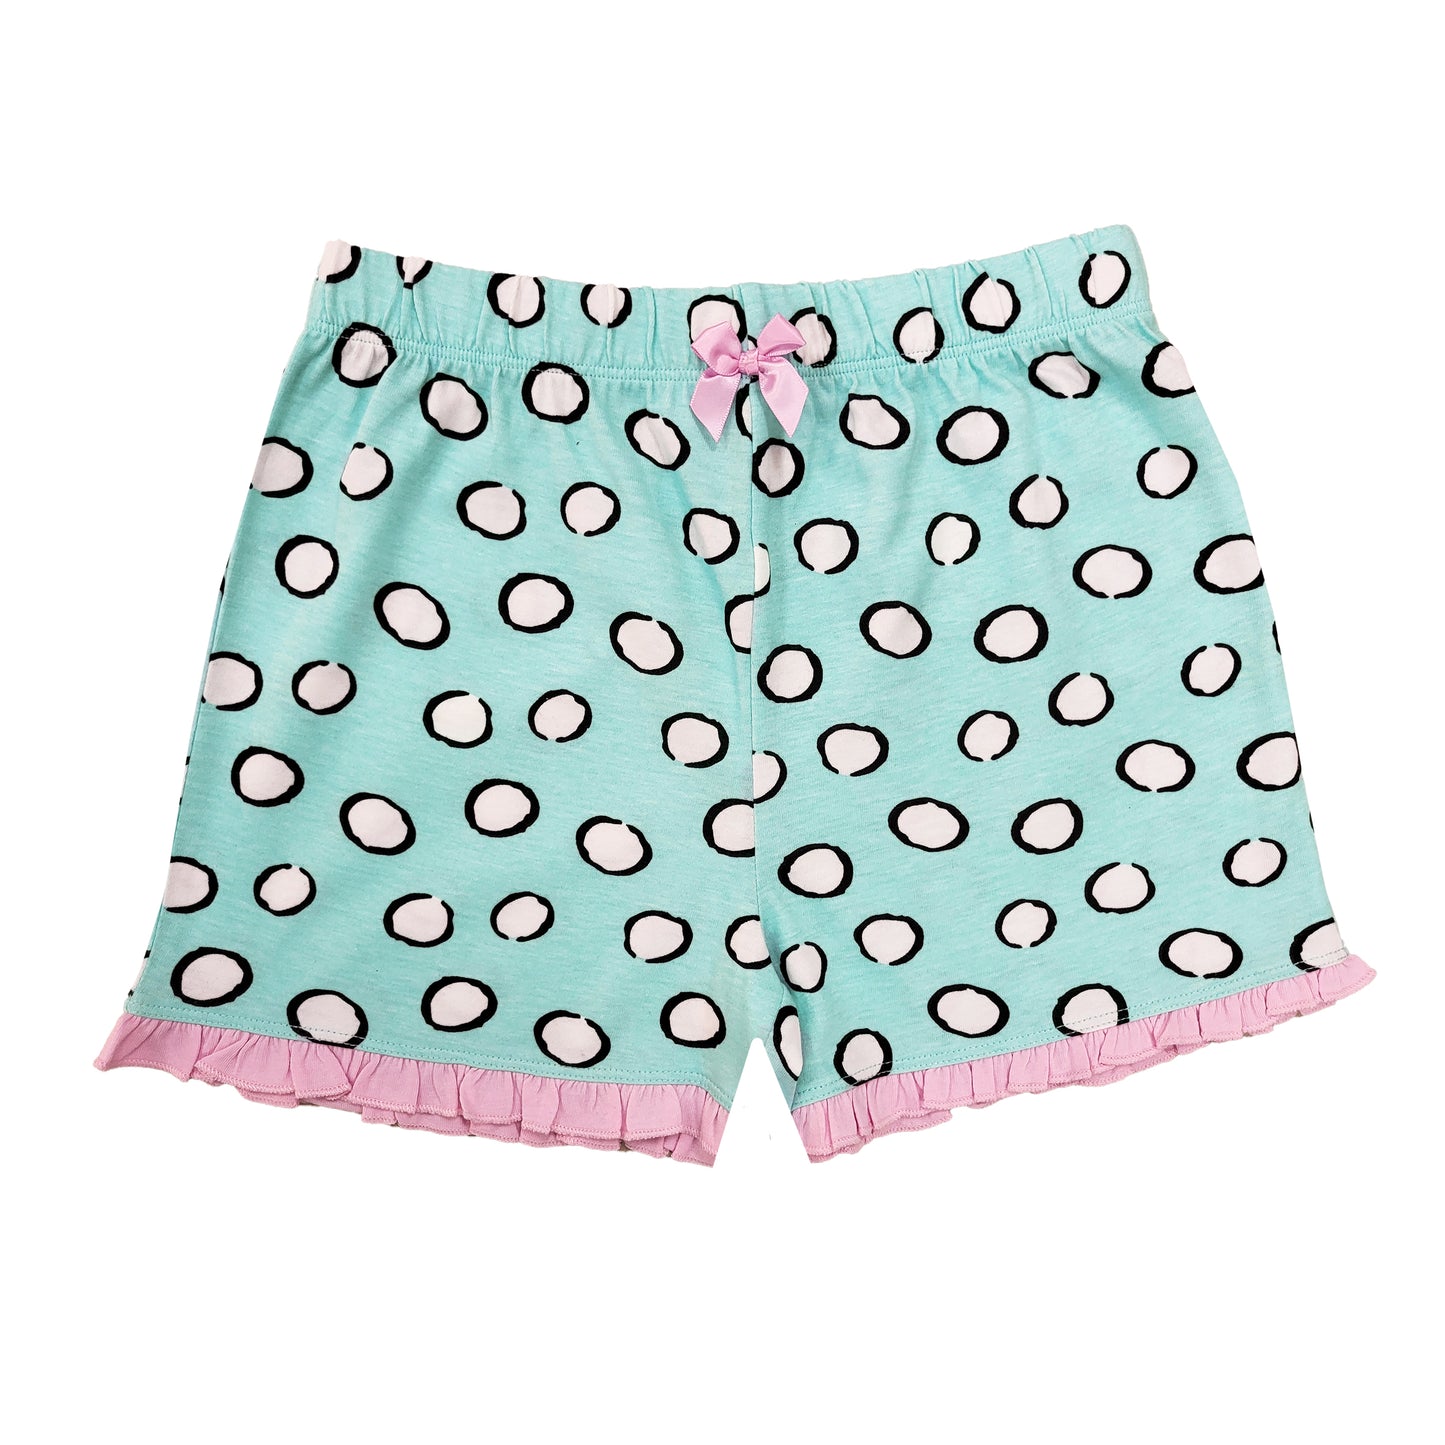 Girls Disney Minnie Mouse Short Pyjamas